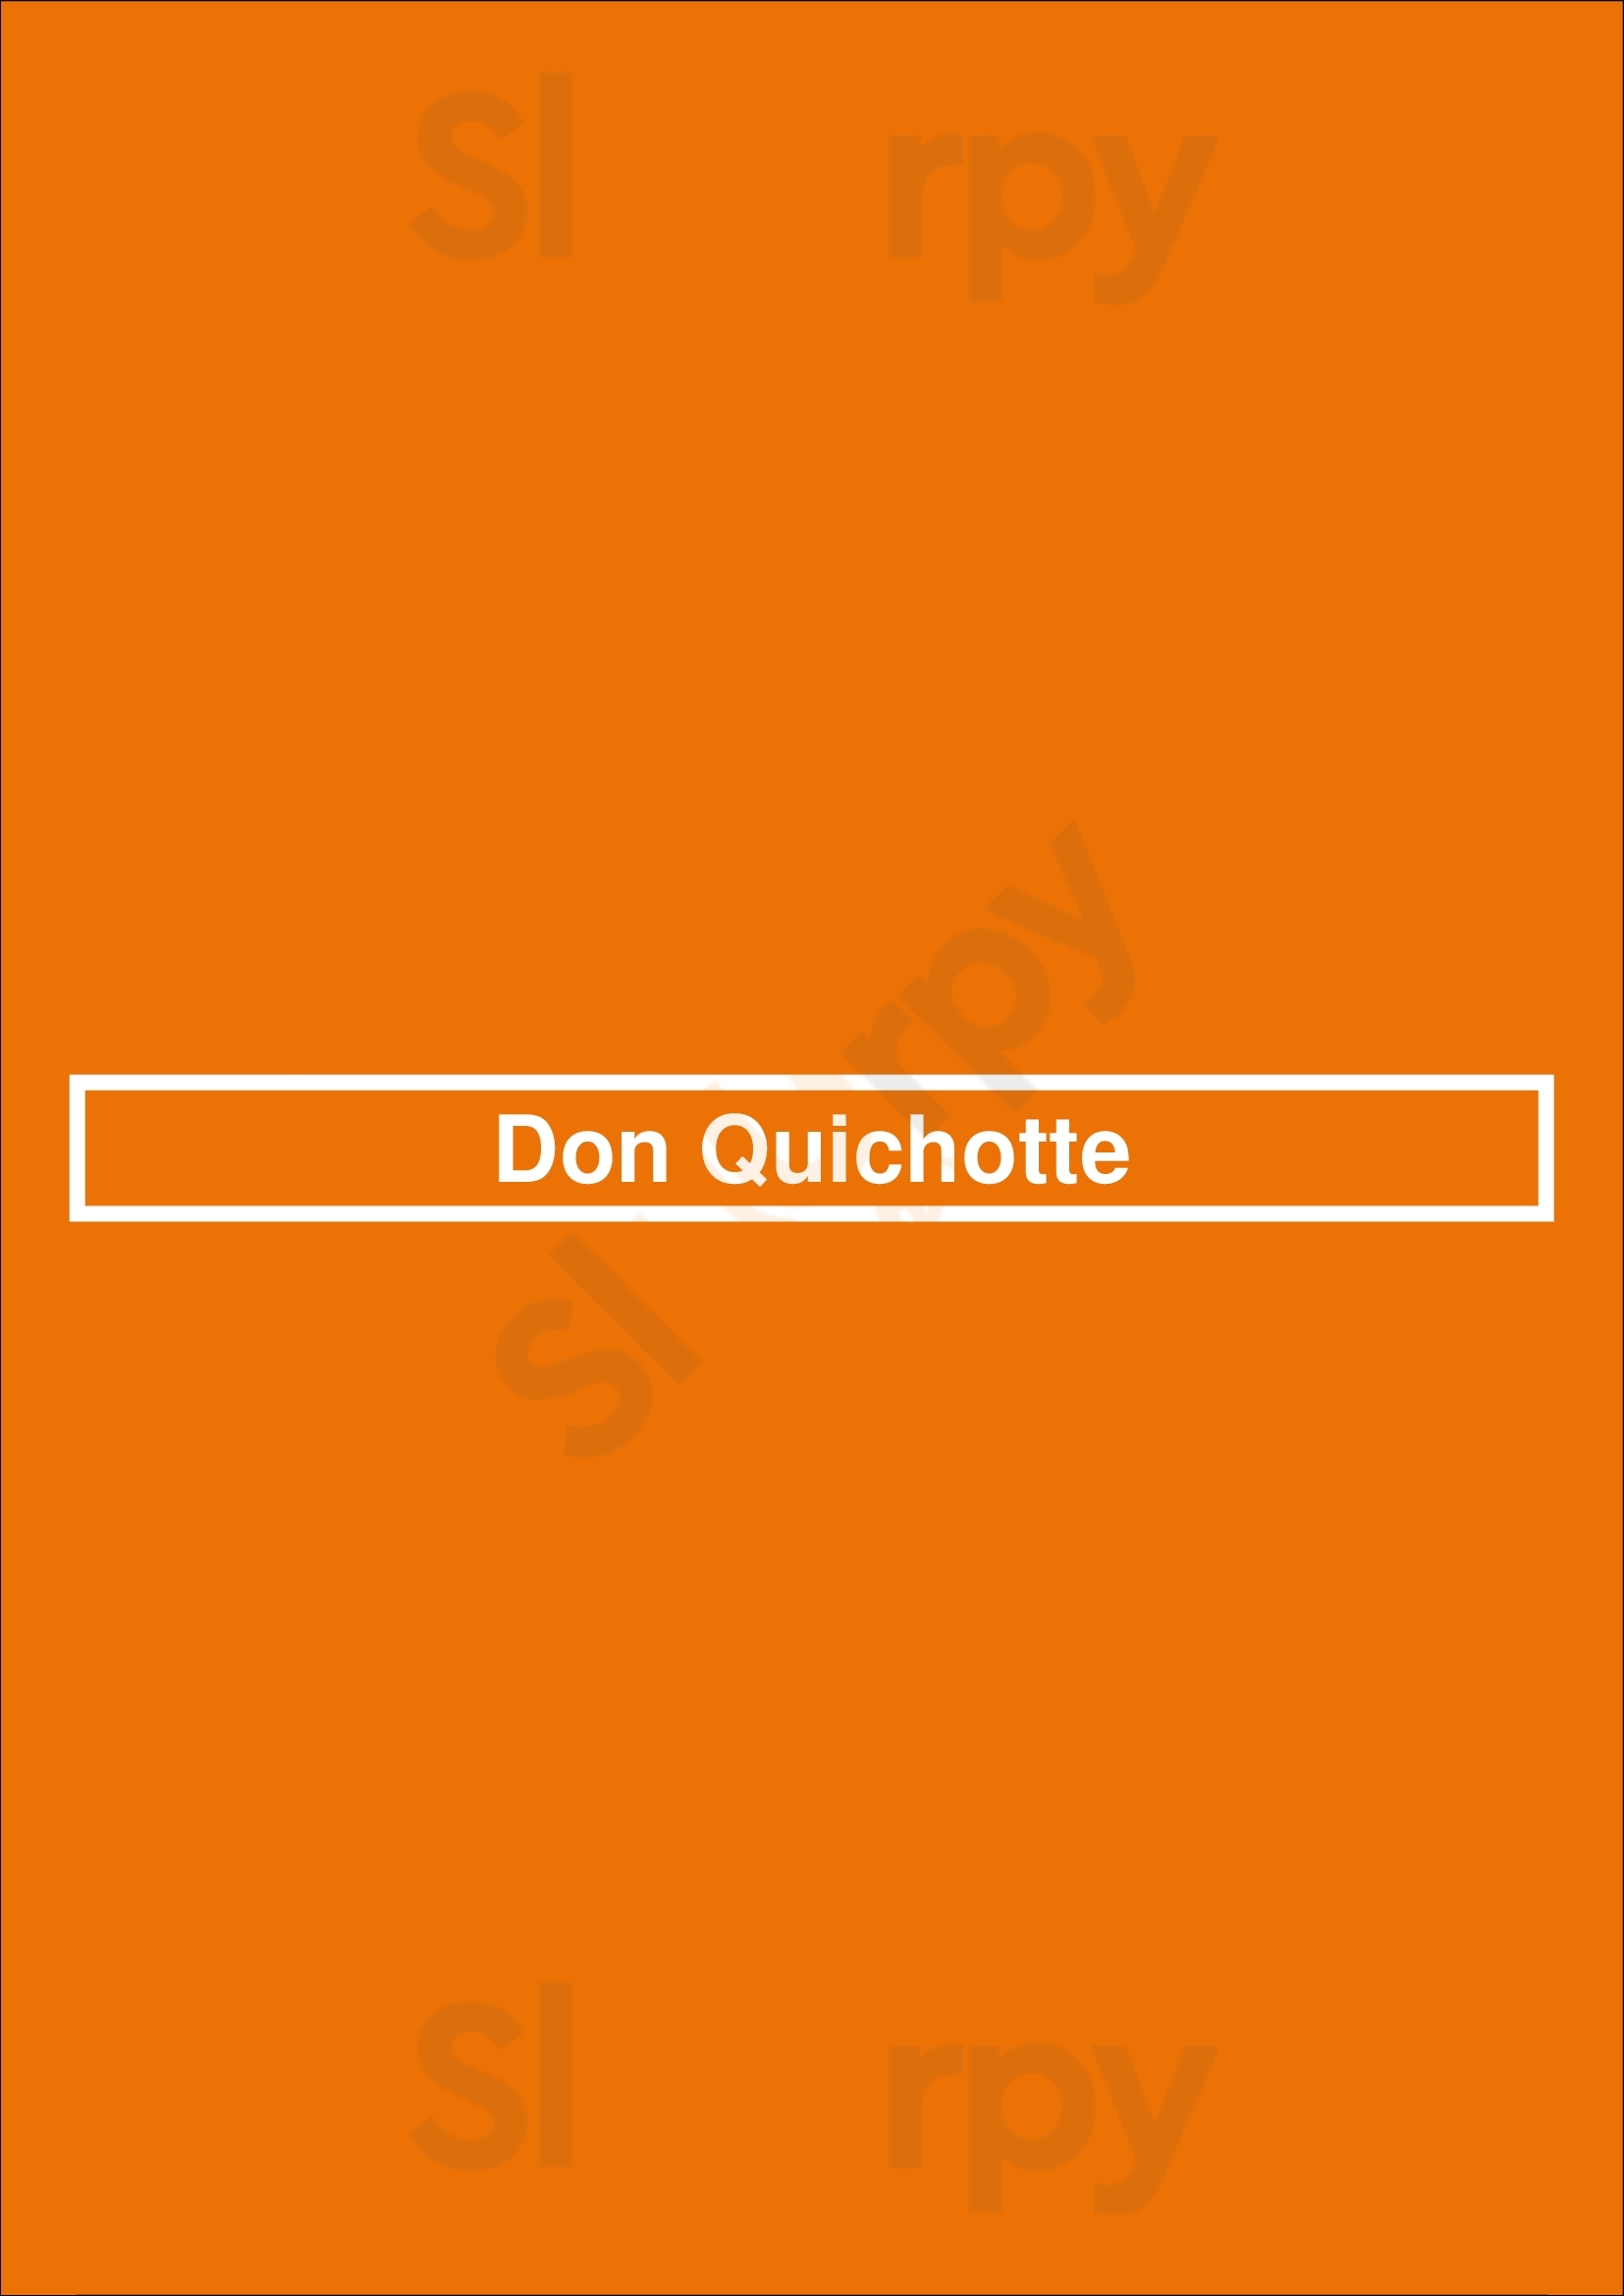 Don Quichotte Apeldoorn Menu - 1